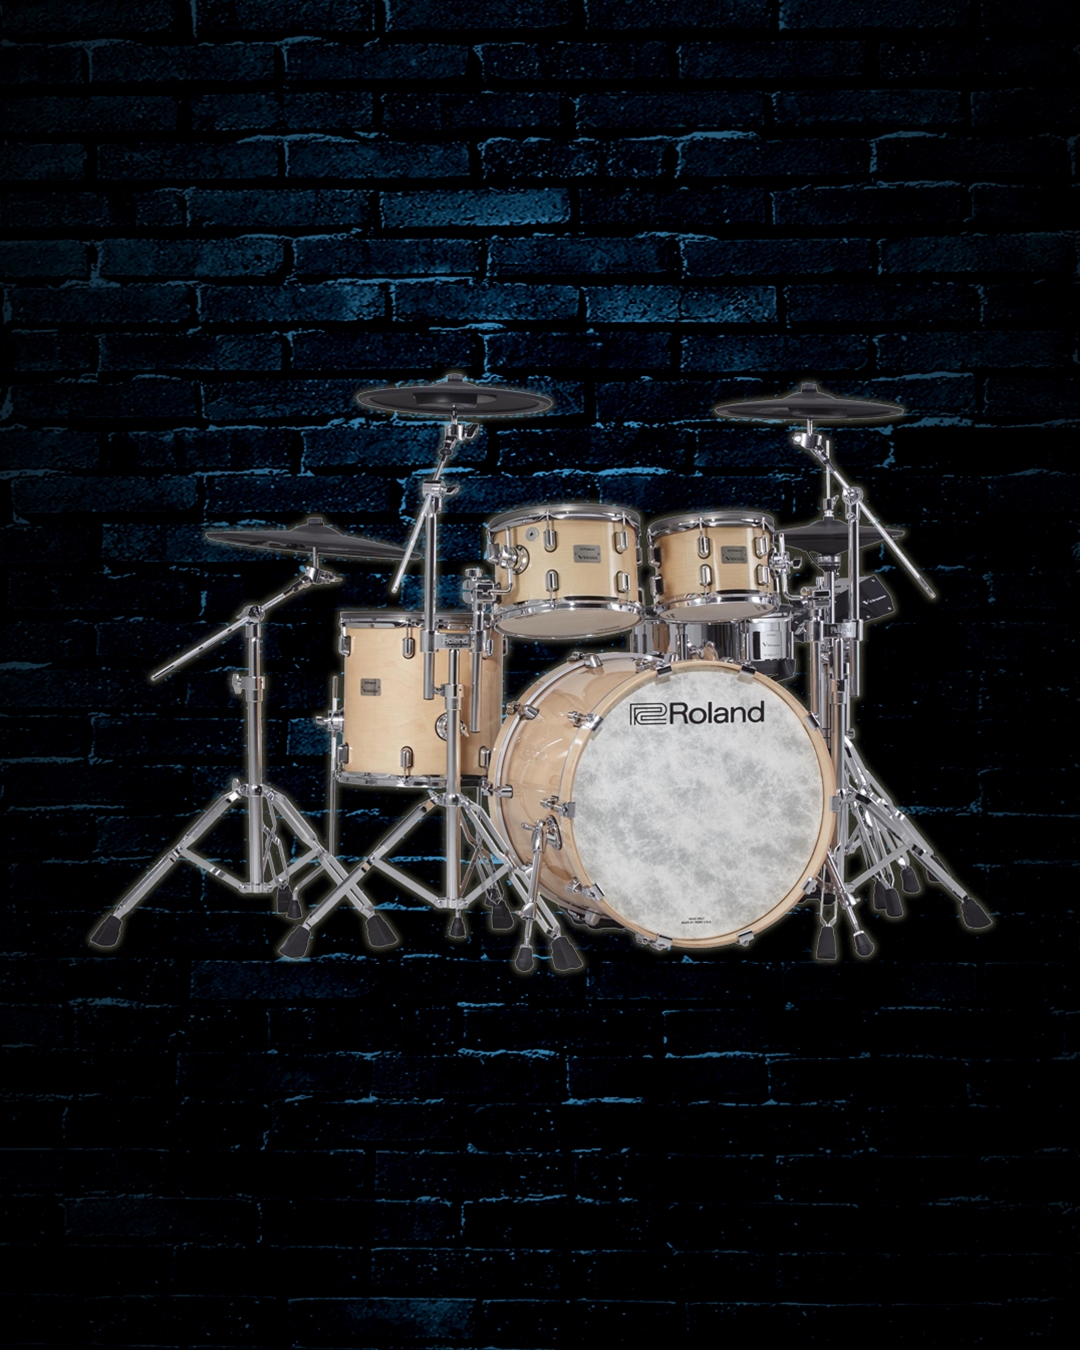 Roland KD-222 Full-Size V-Drums Acoustic Design 22 Kick Drum Pad (Gloss Ebony)